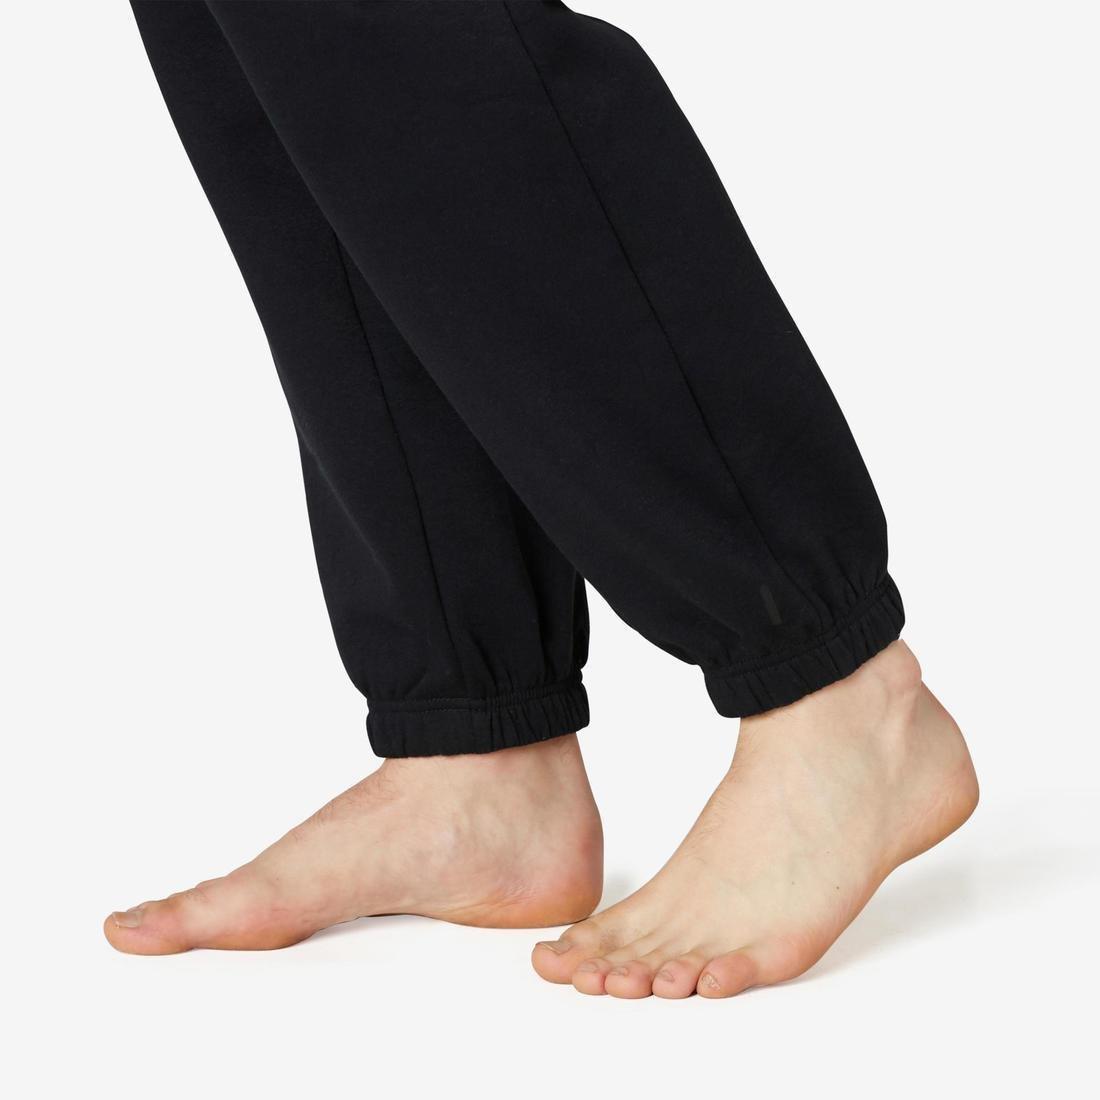 DOMYOS - Fitness Fleece Jogging Bottoms With Zip Pockets, Black